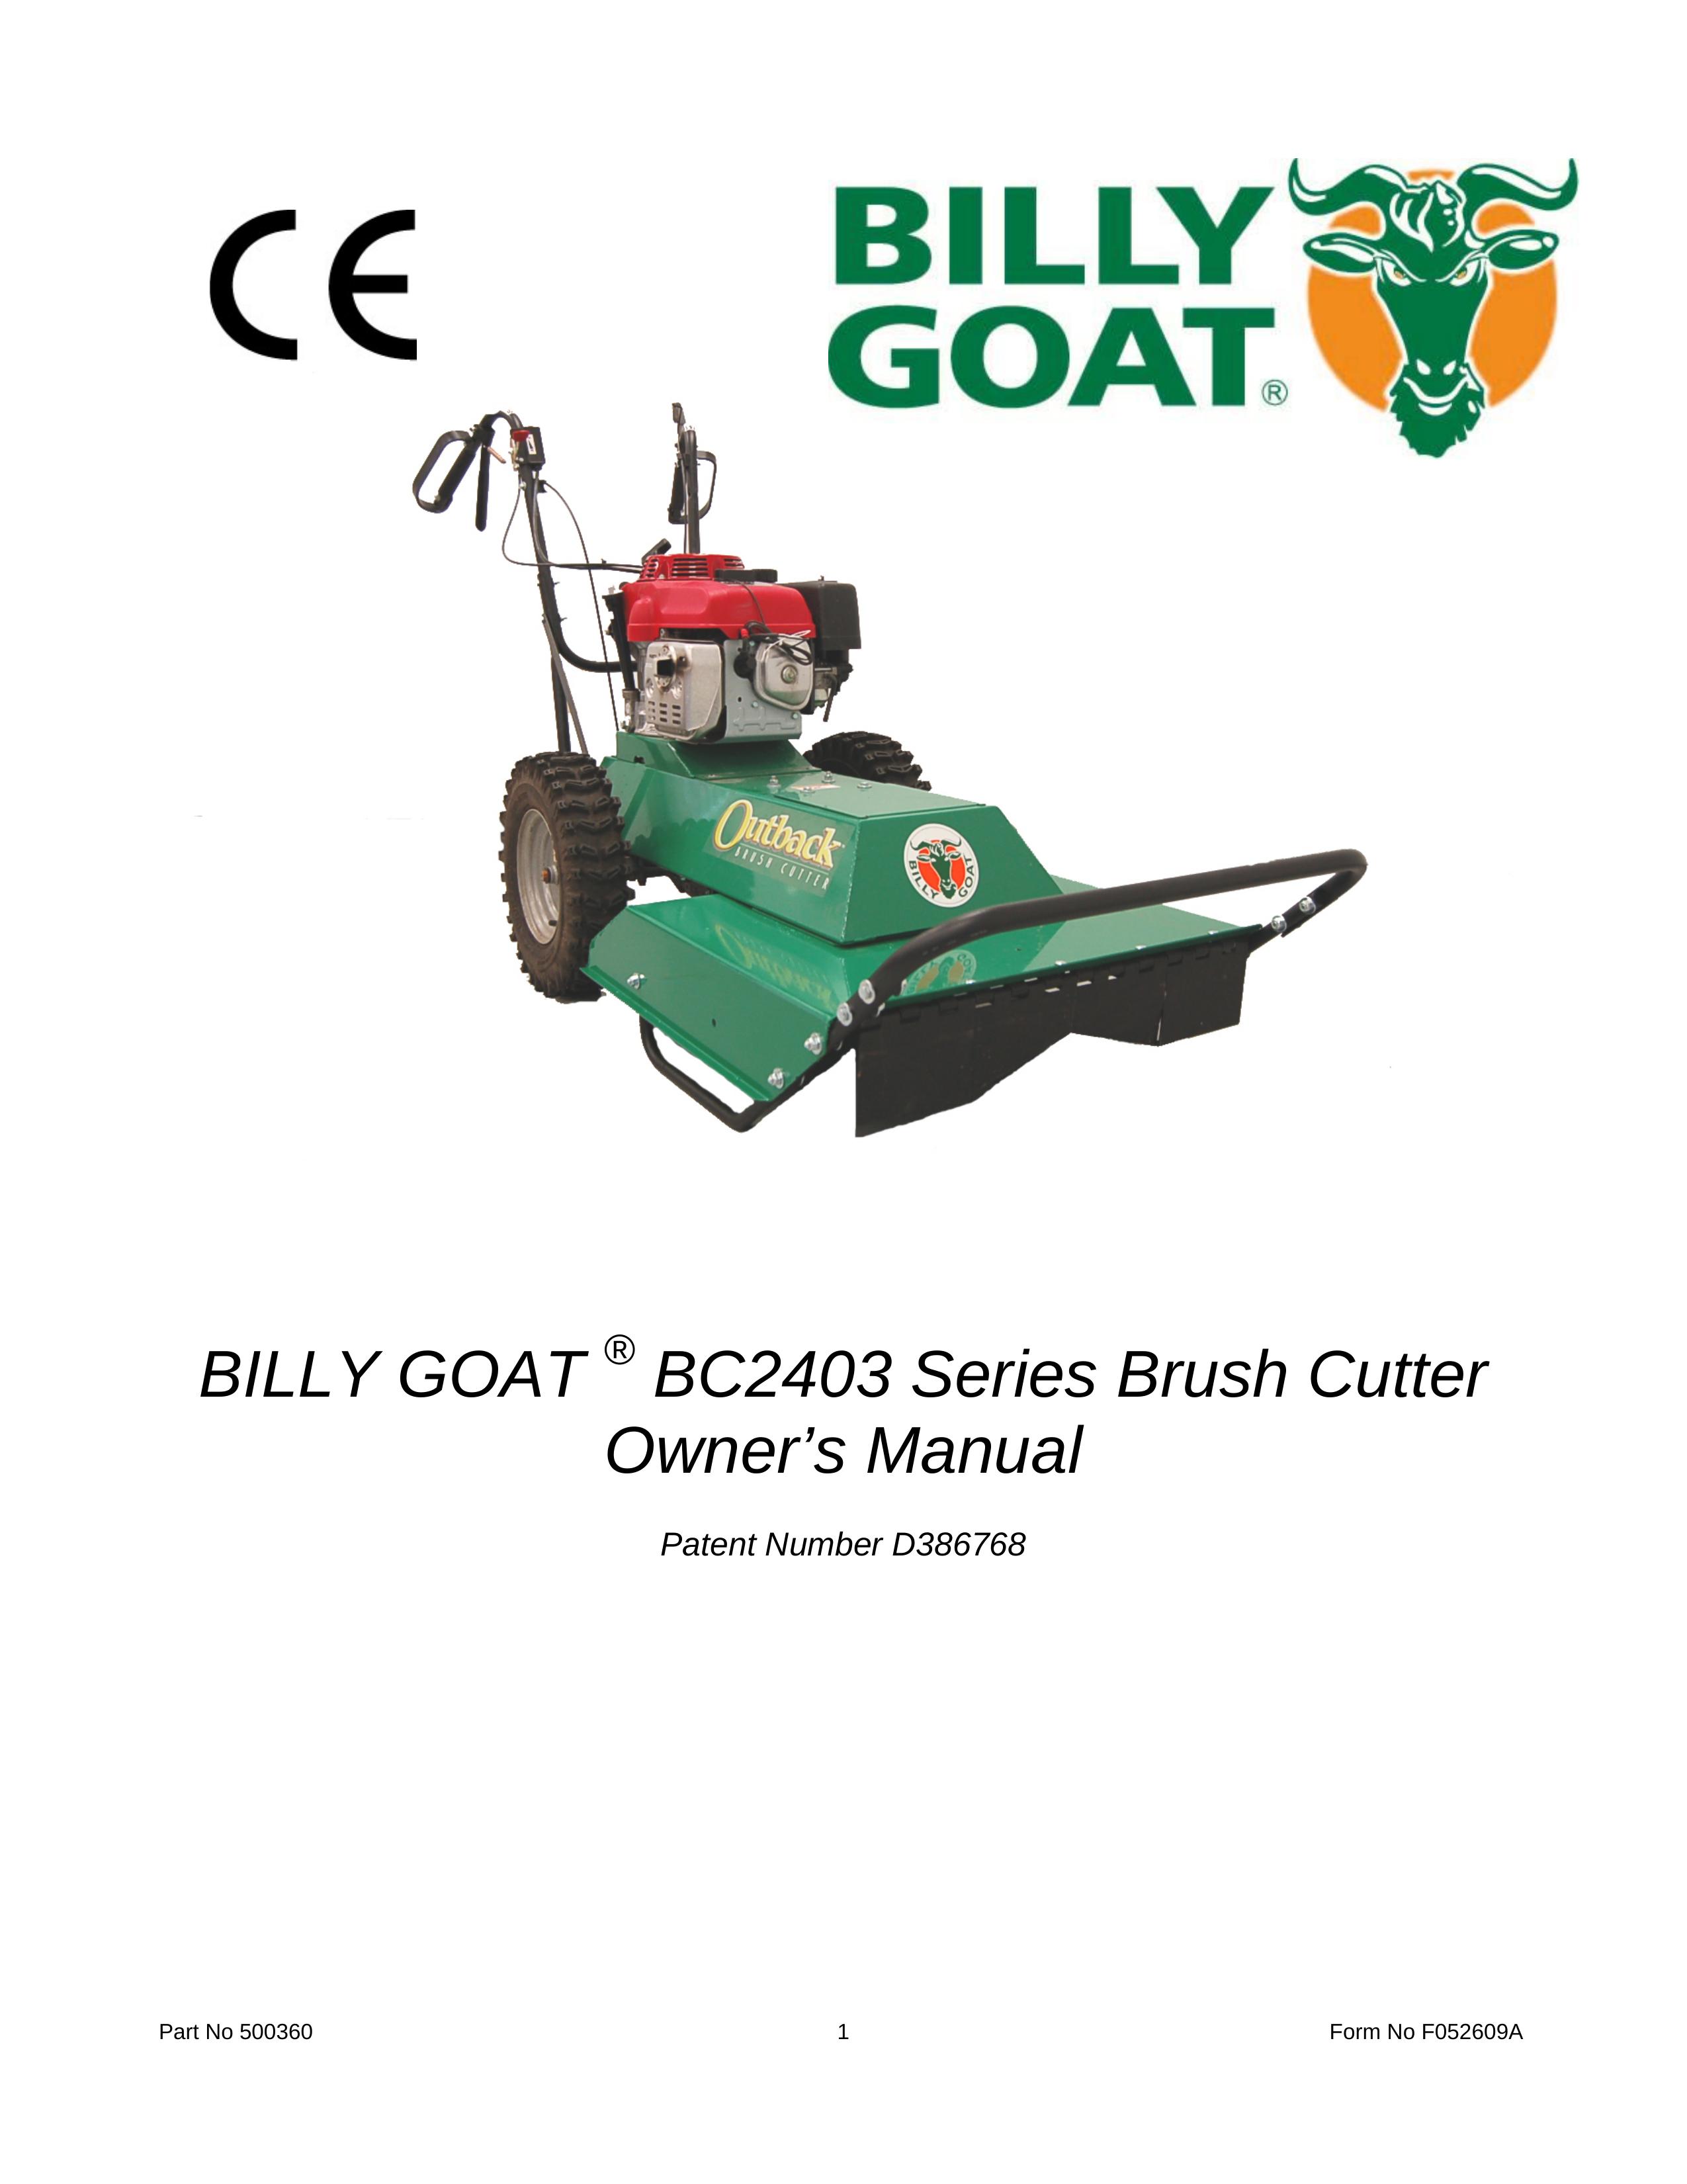 Billy Goat BC2403 Brush Cutter User Manual